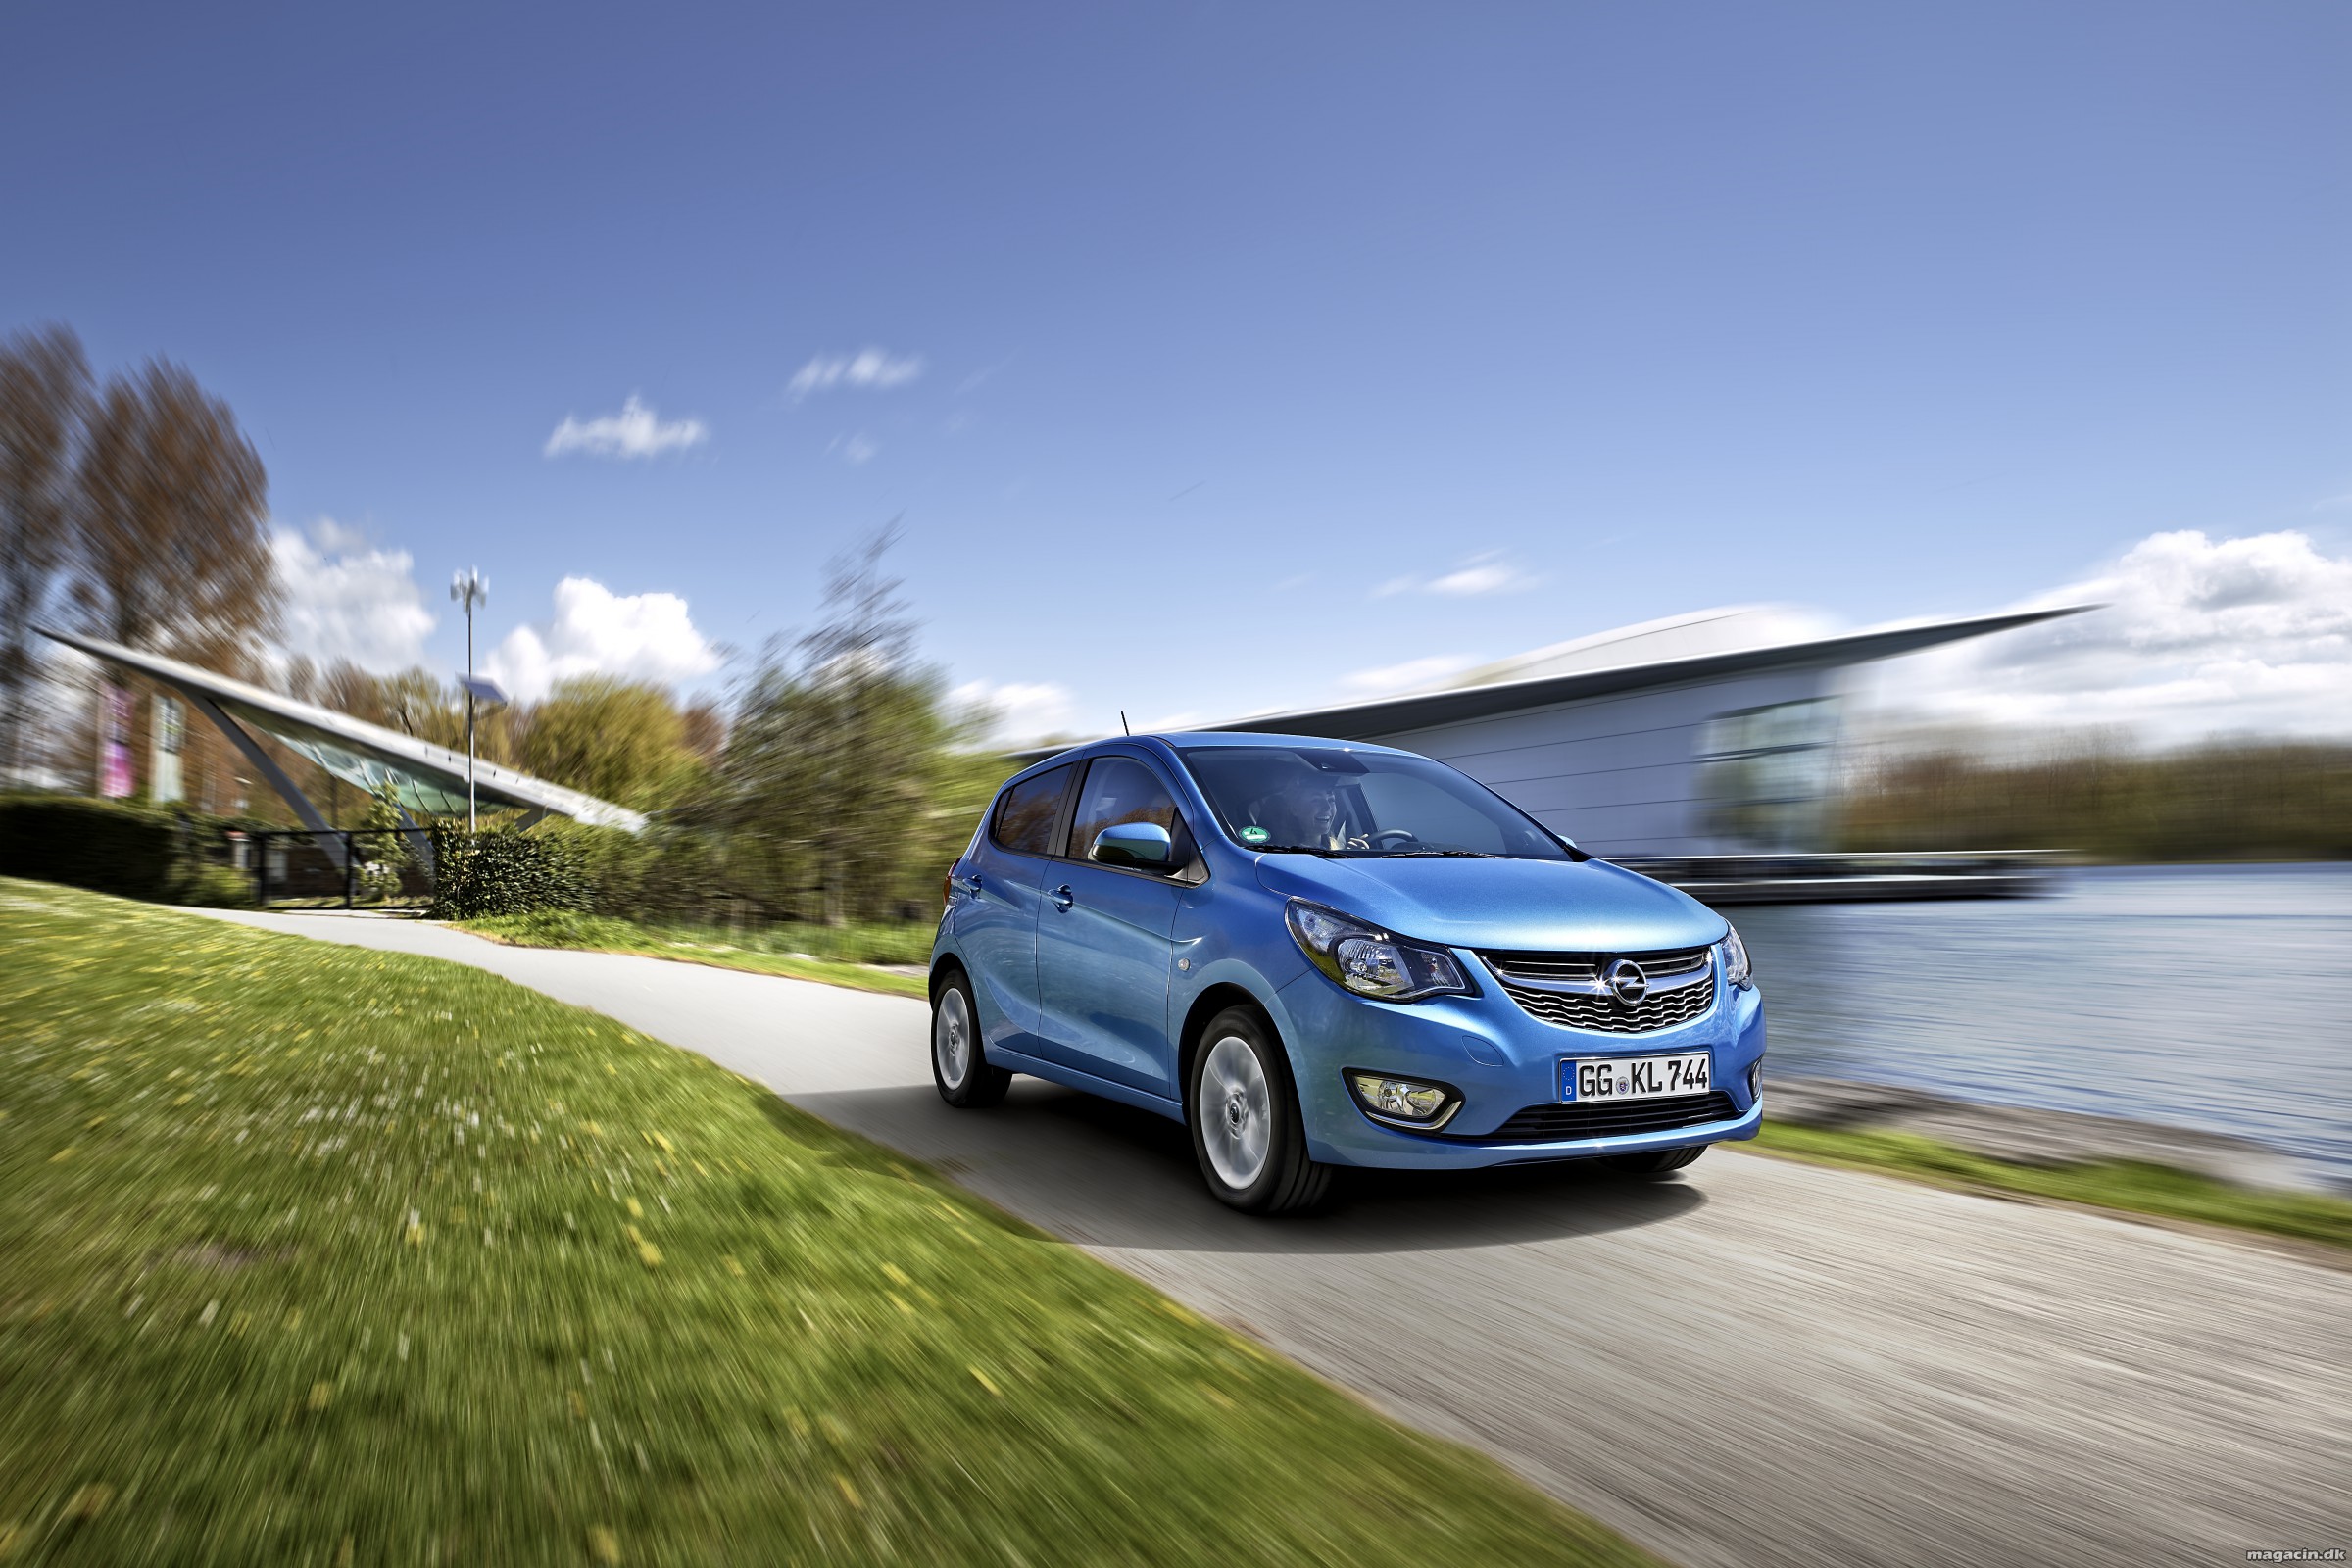 Minitest: Opel ejer fremtiden i mikroklassen